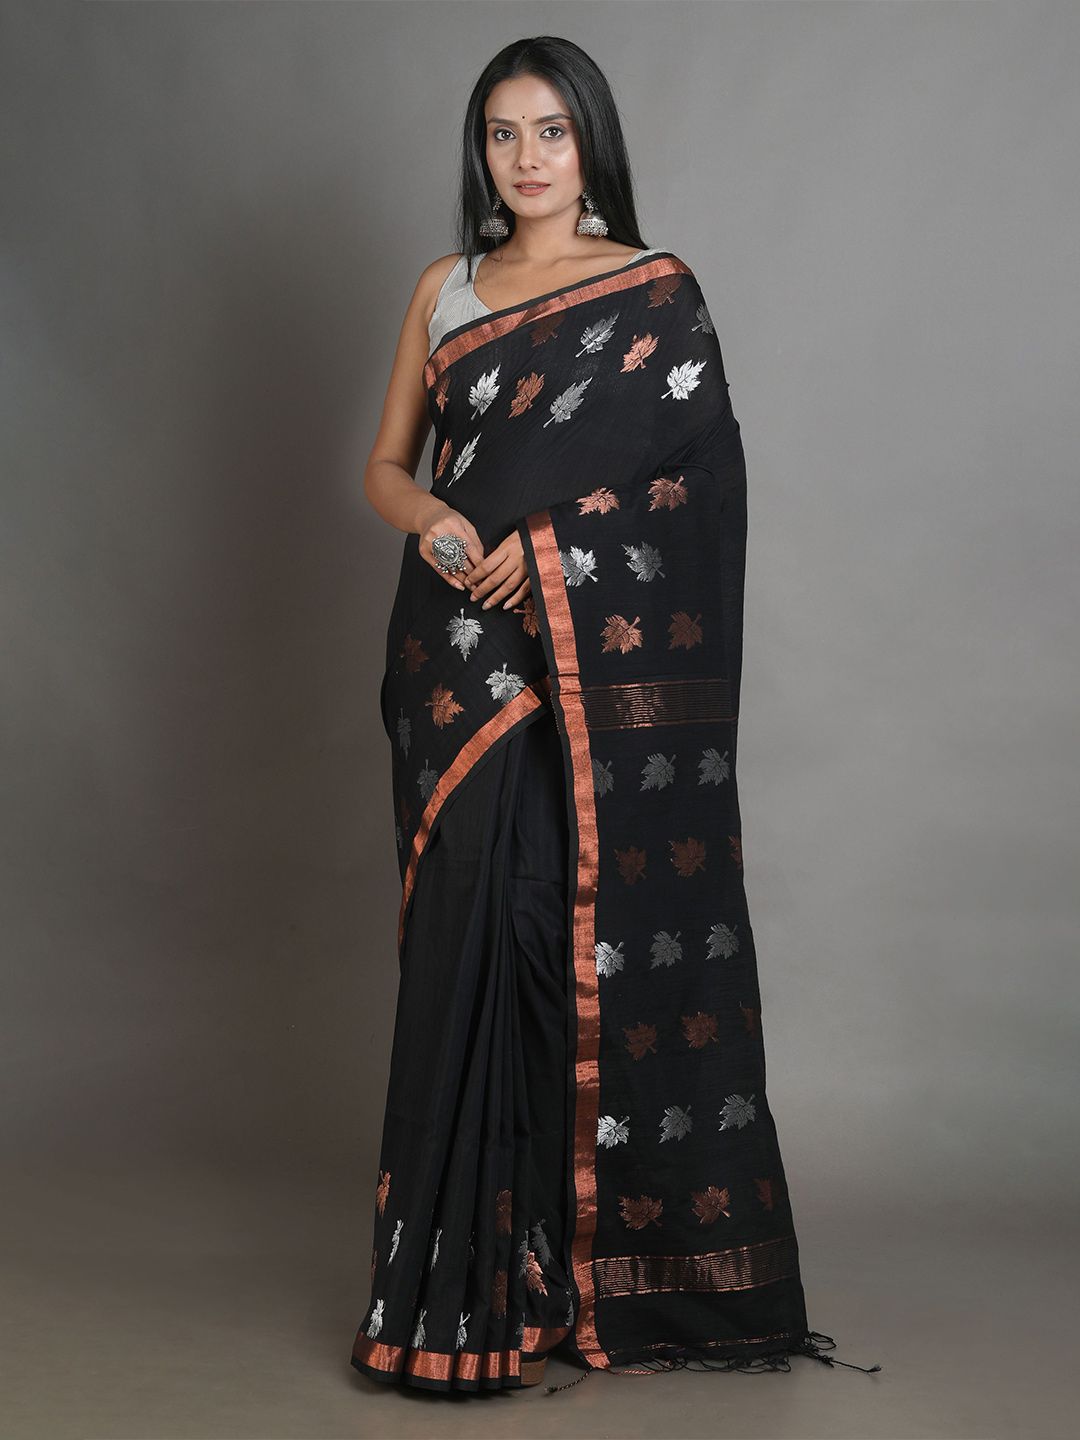 Arhi Black & Silver-Toned Floral Pure Linen Saree Price in India